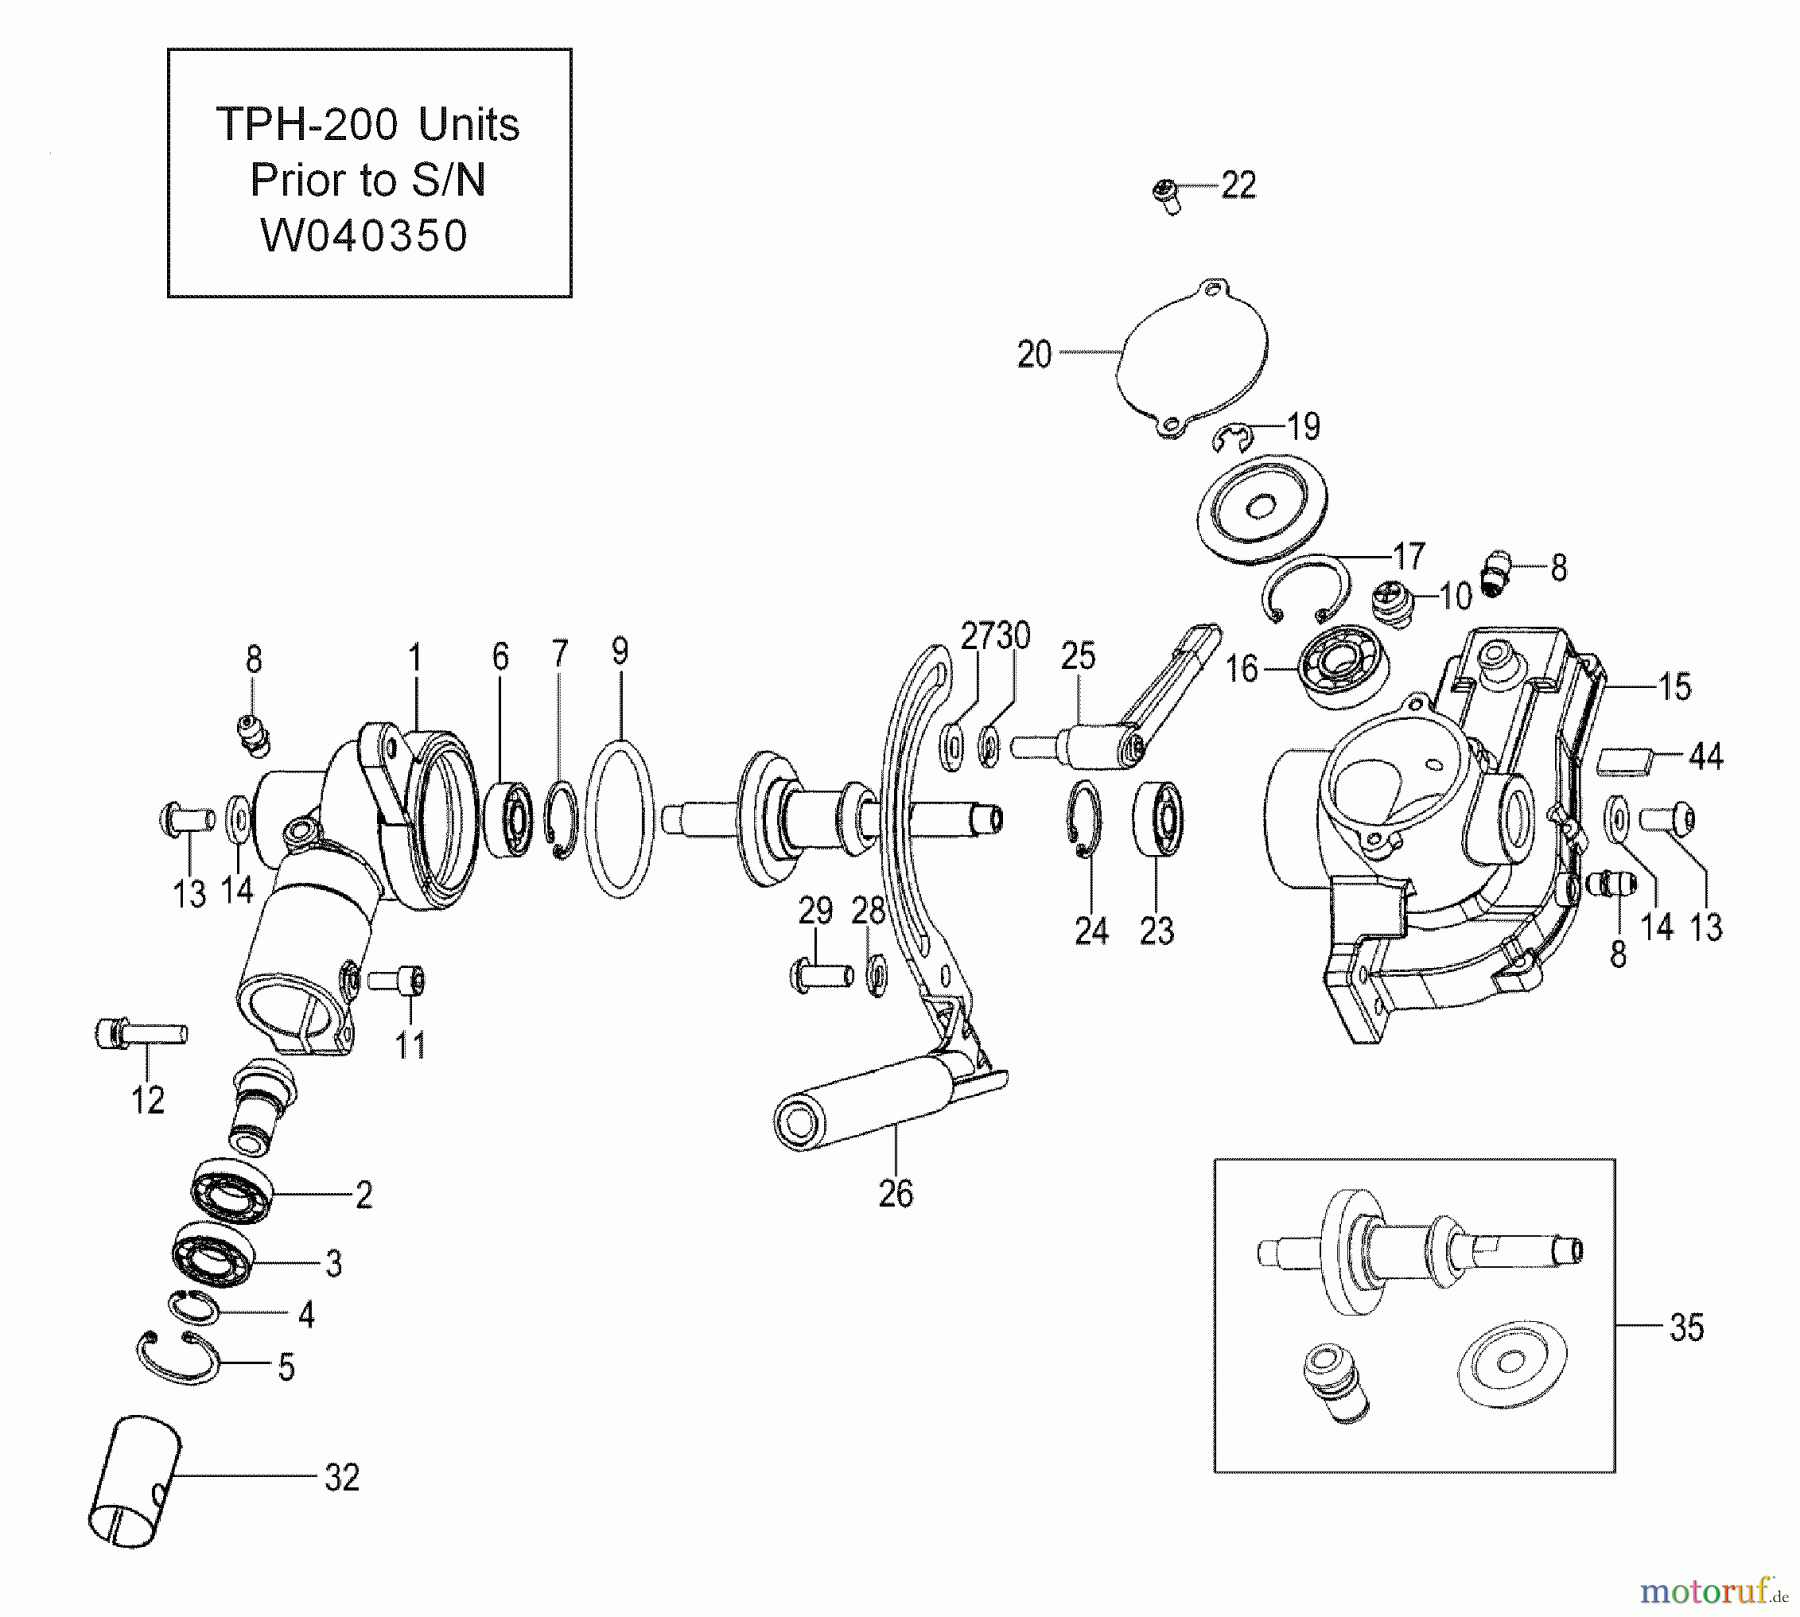  Tanaka Zubehör TPH-210 - Tanaka Articulating Hedgetrimmer Attachment Gear Case, Adjusting Handle, Gears (Prior to S/N W040350)